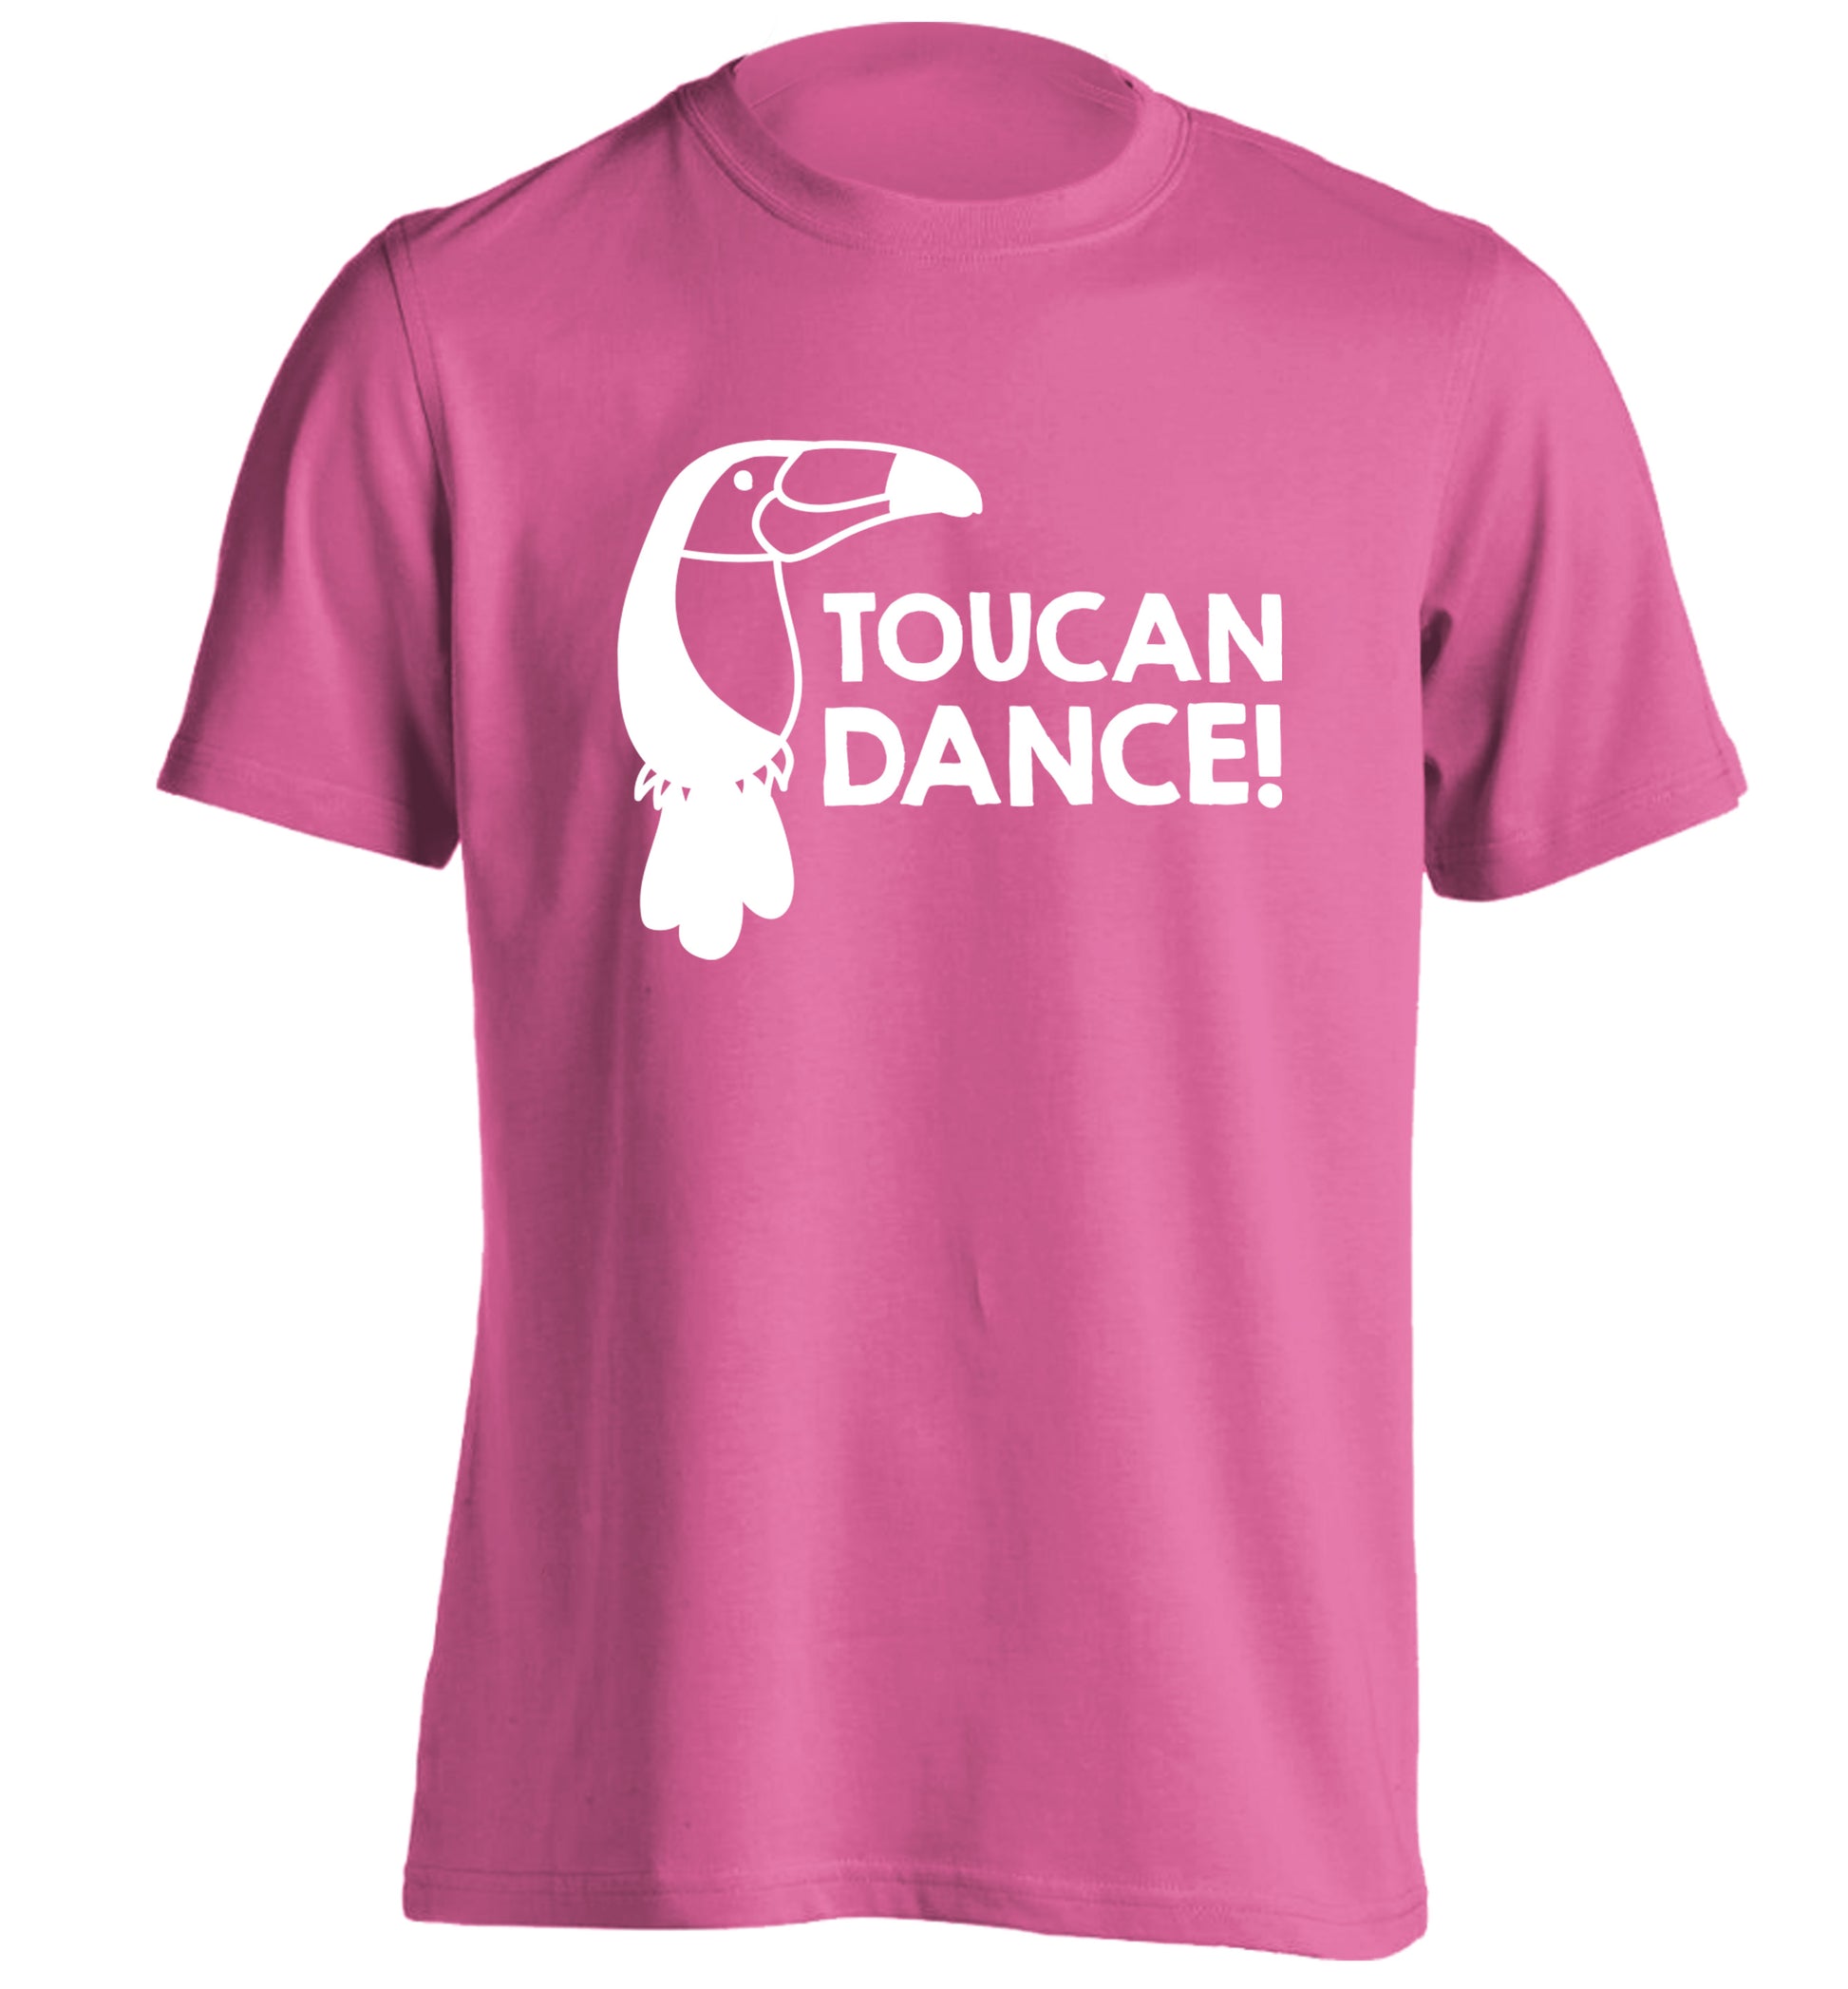 Toucan dance adults unisex pink Tshirt 2XL